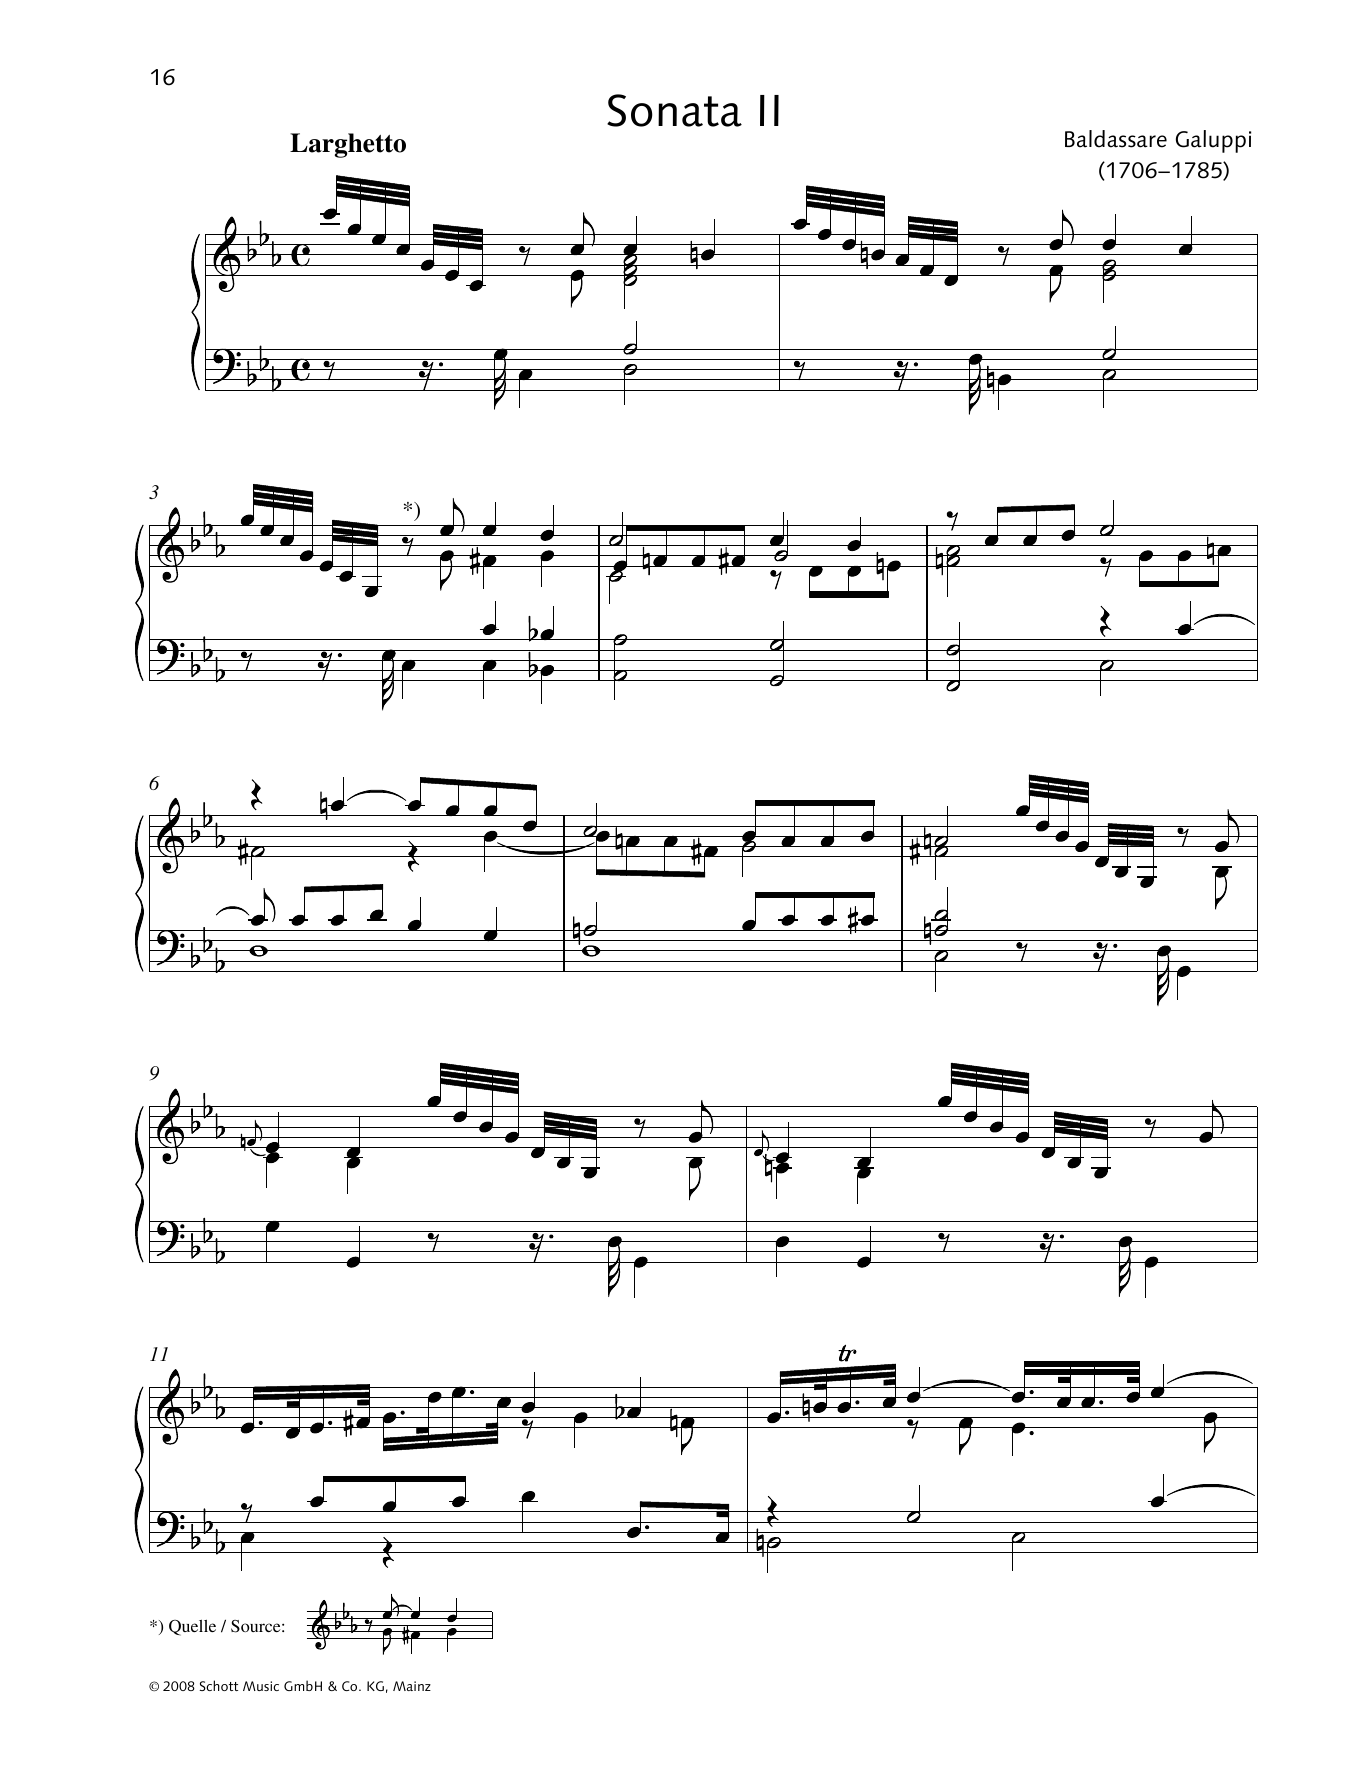 Baldassare Galuppi Sonata II C minor sheet music notes and chords arranged for Piano Solo